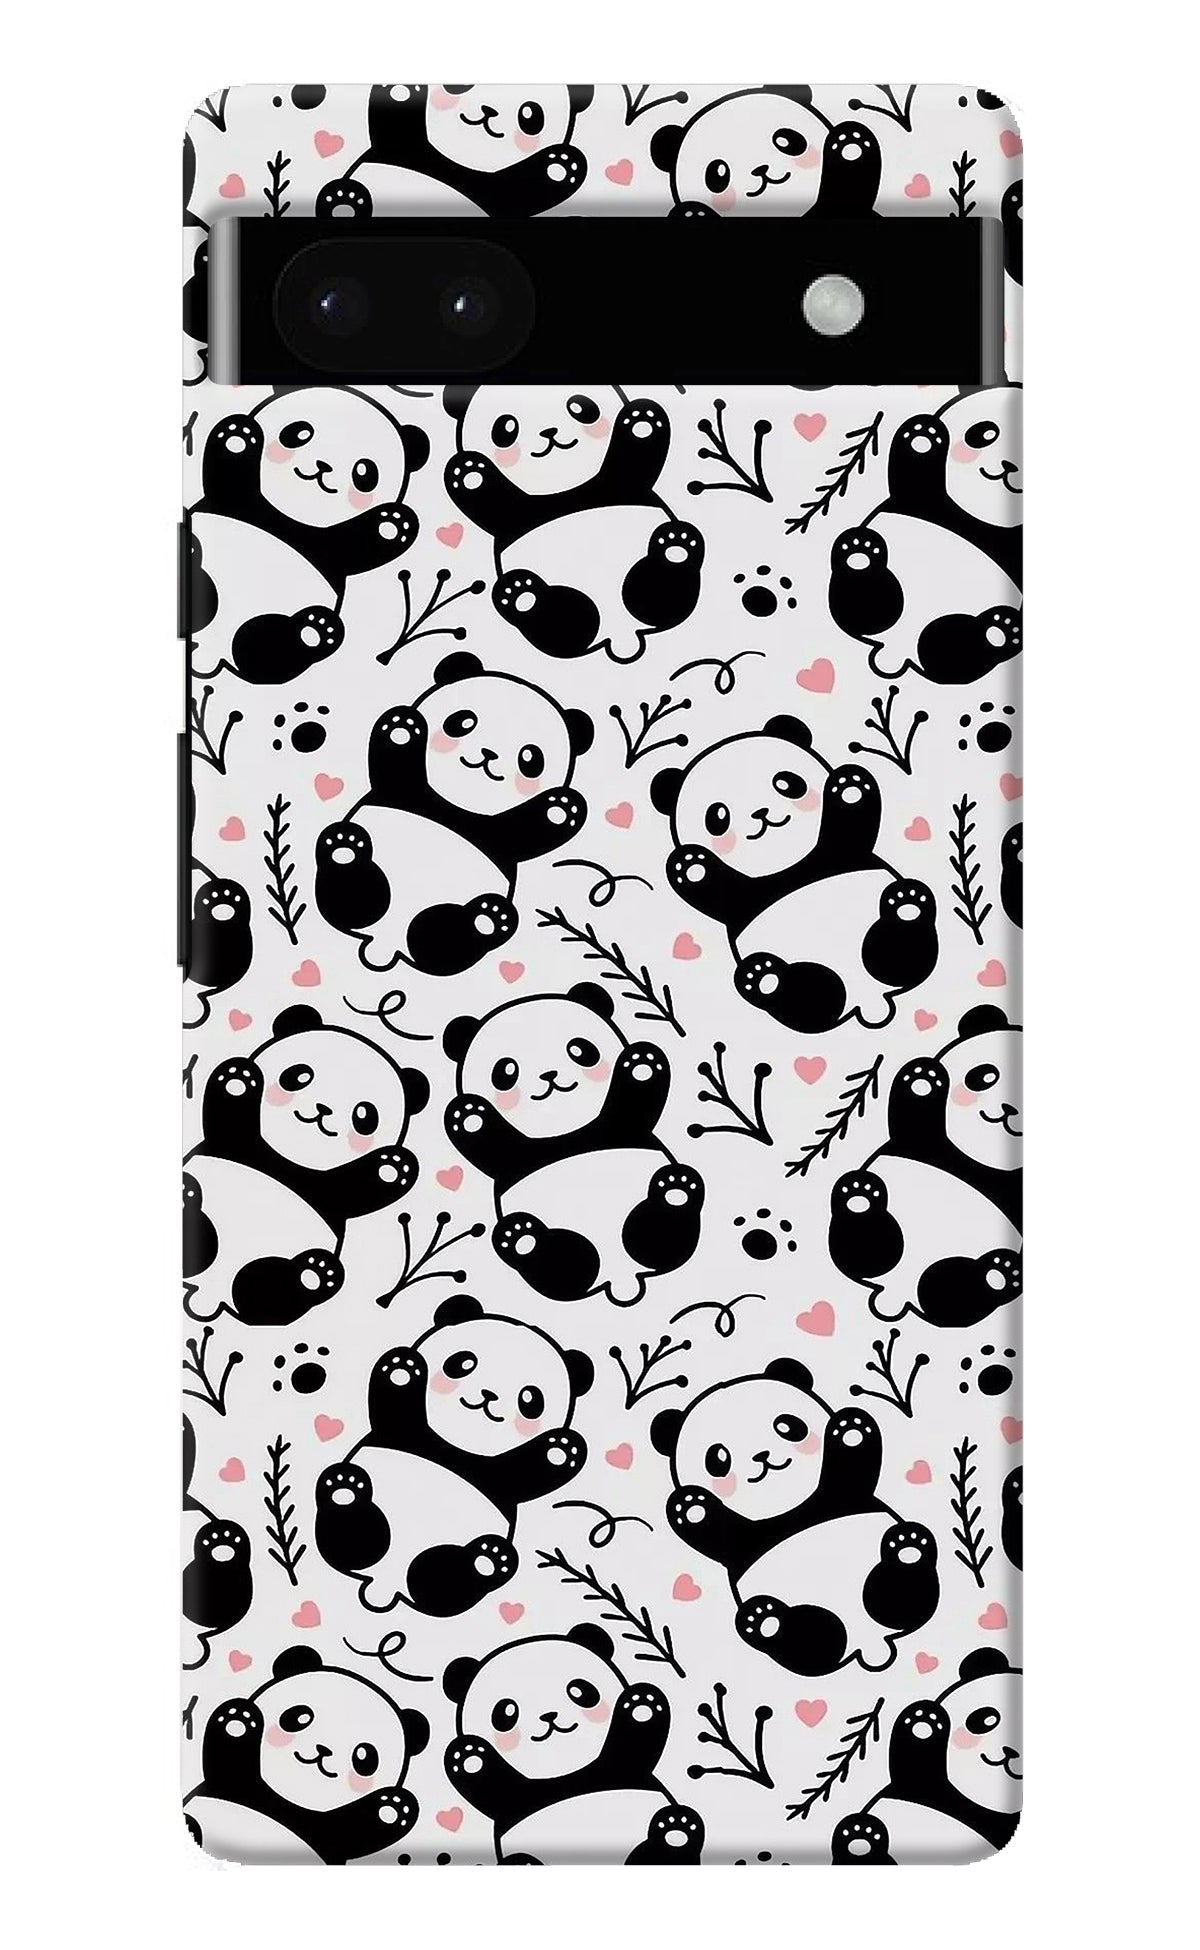 Cute Panda Google Pixel 6A Back Cover